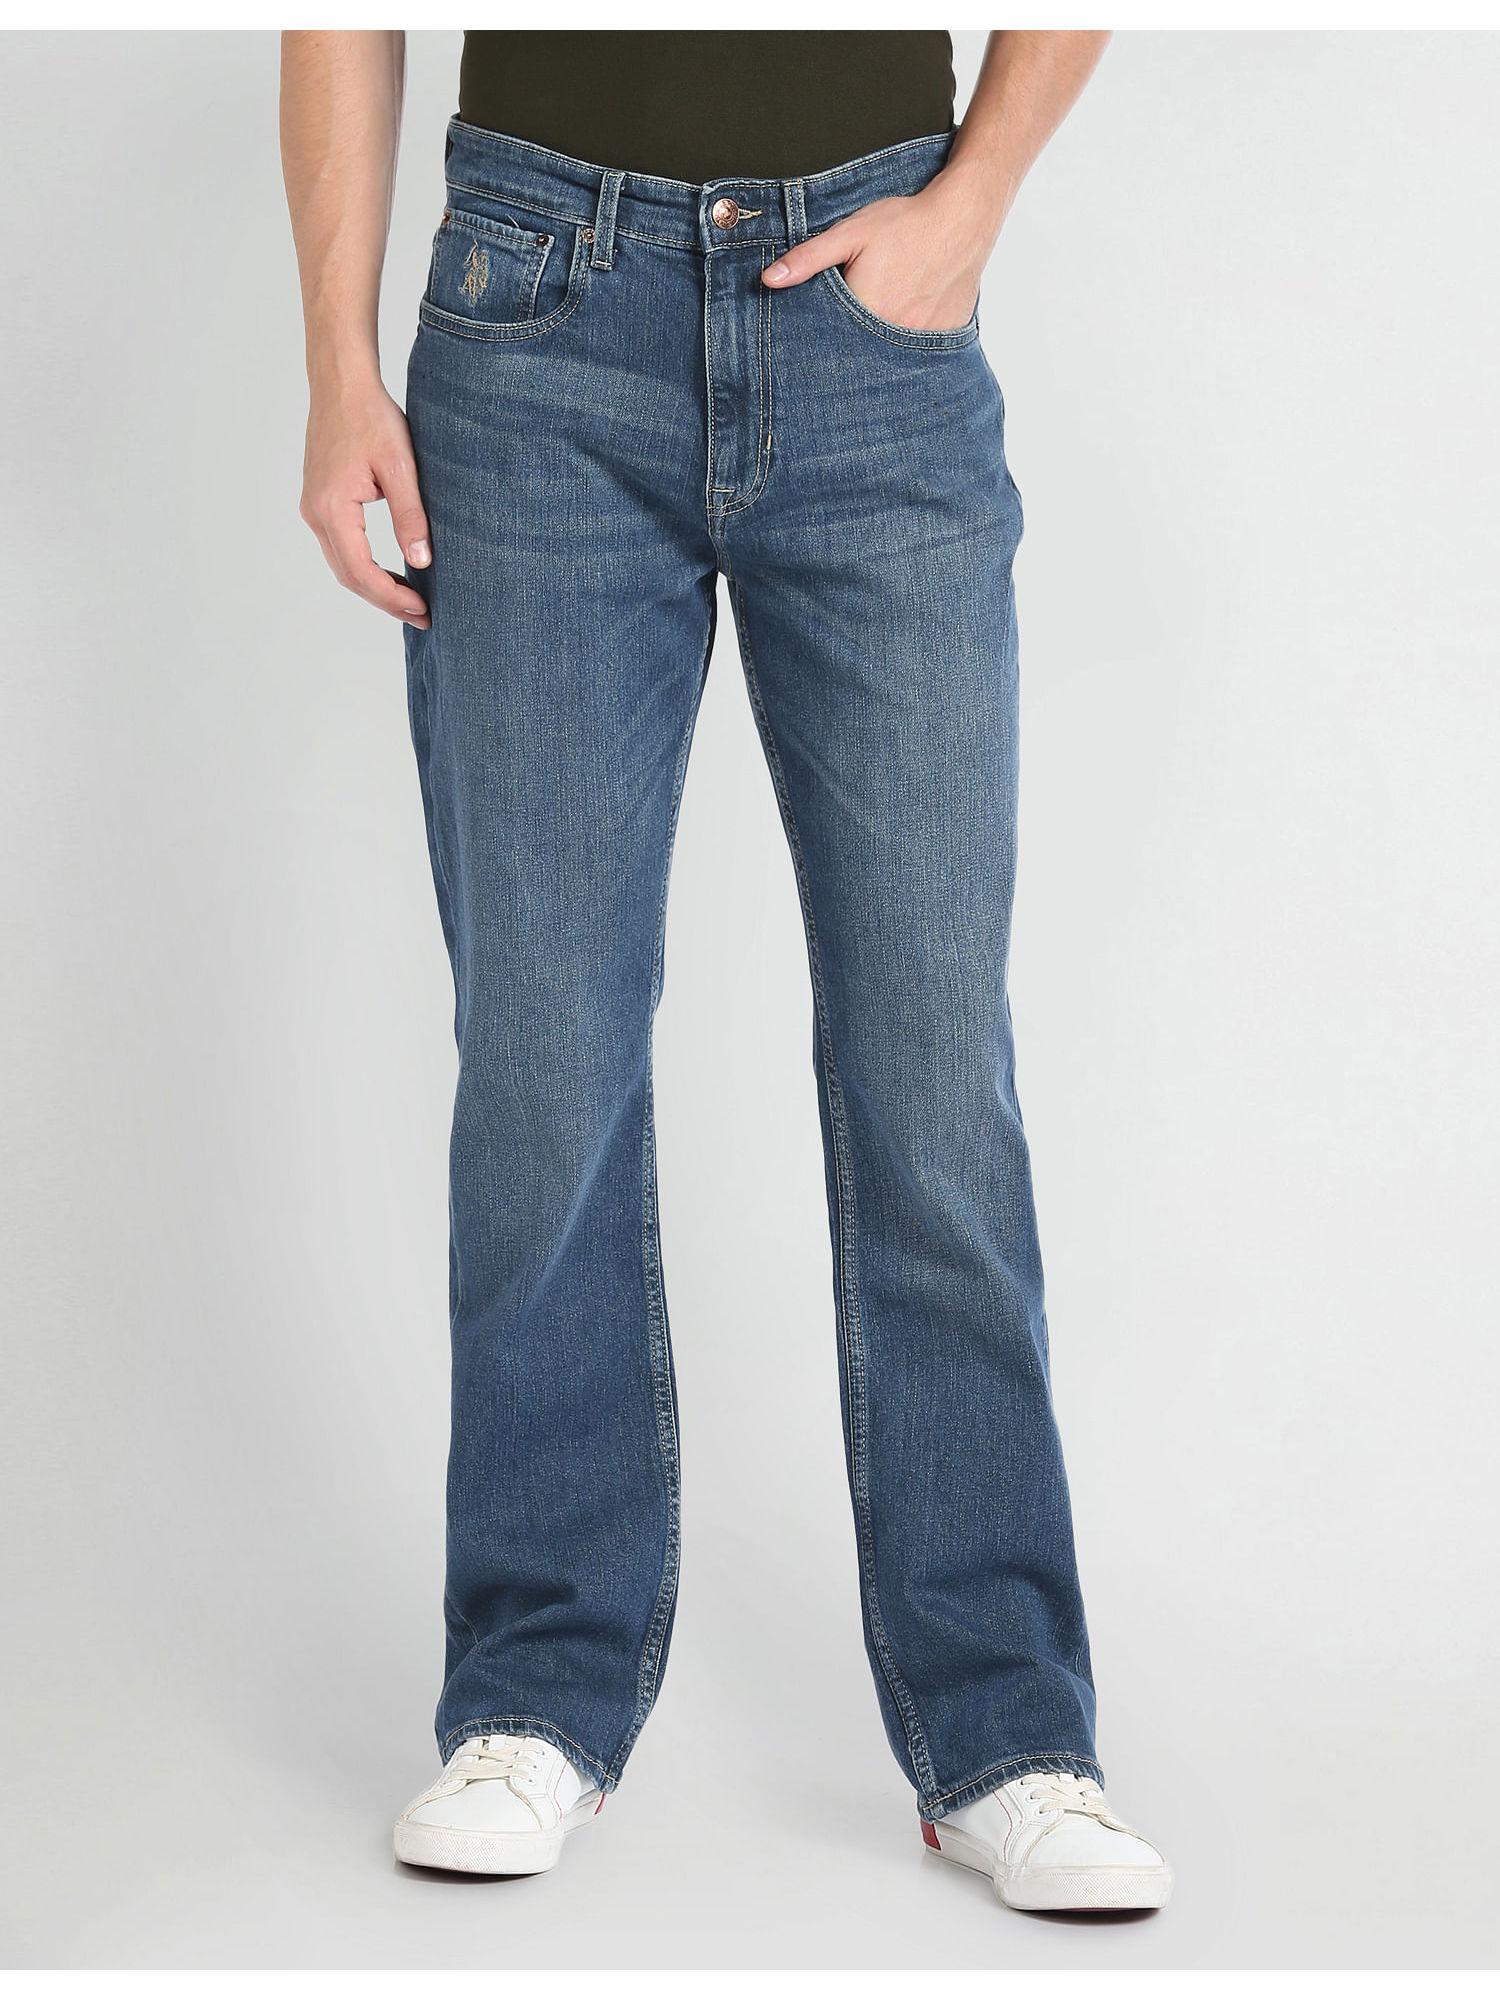 connor-boot-cut-fit-blue-jeans